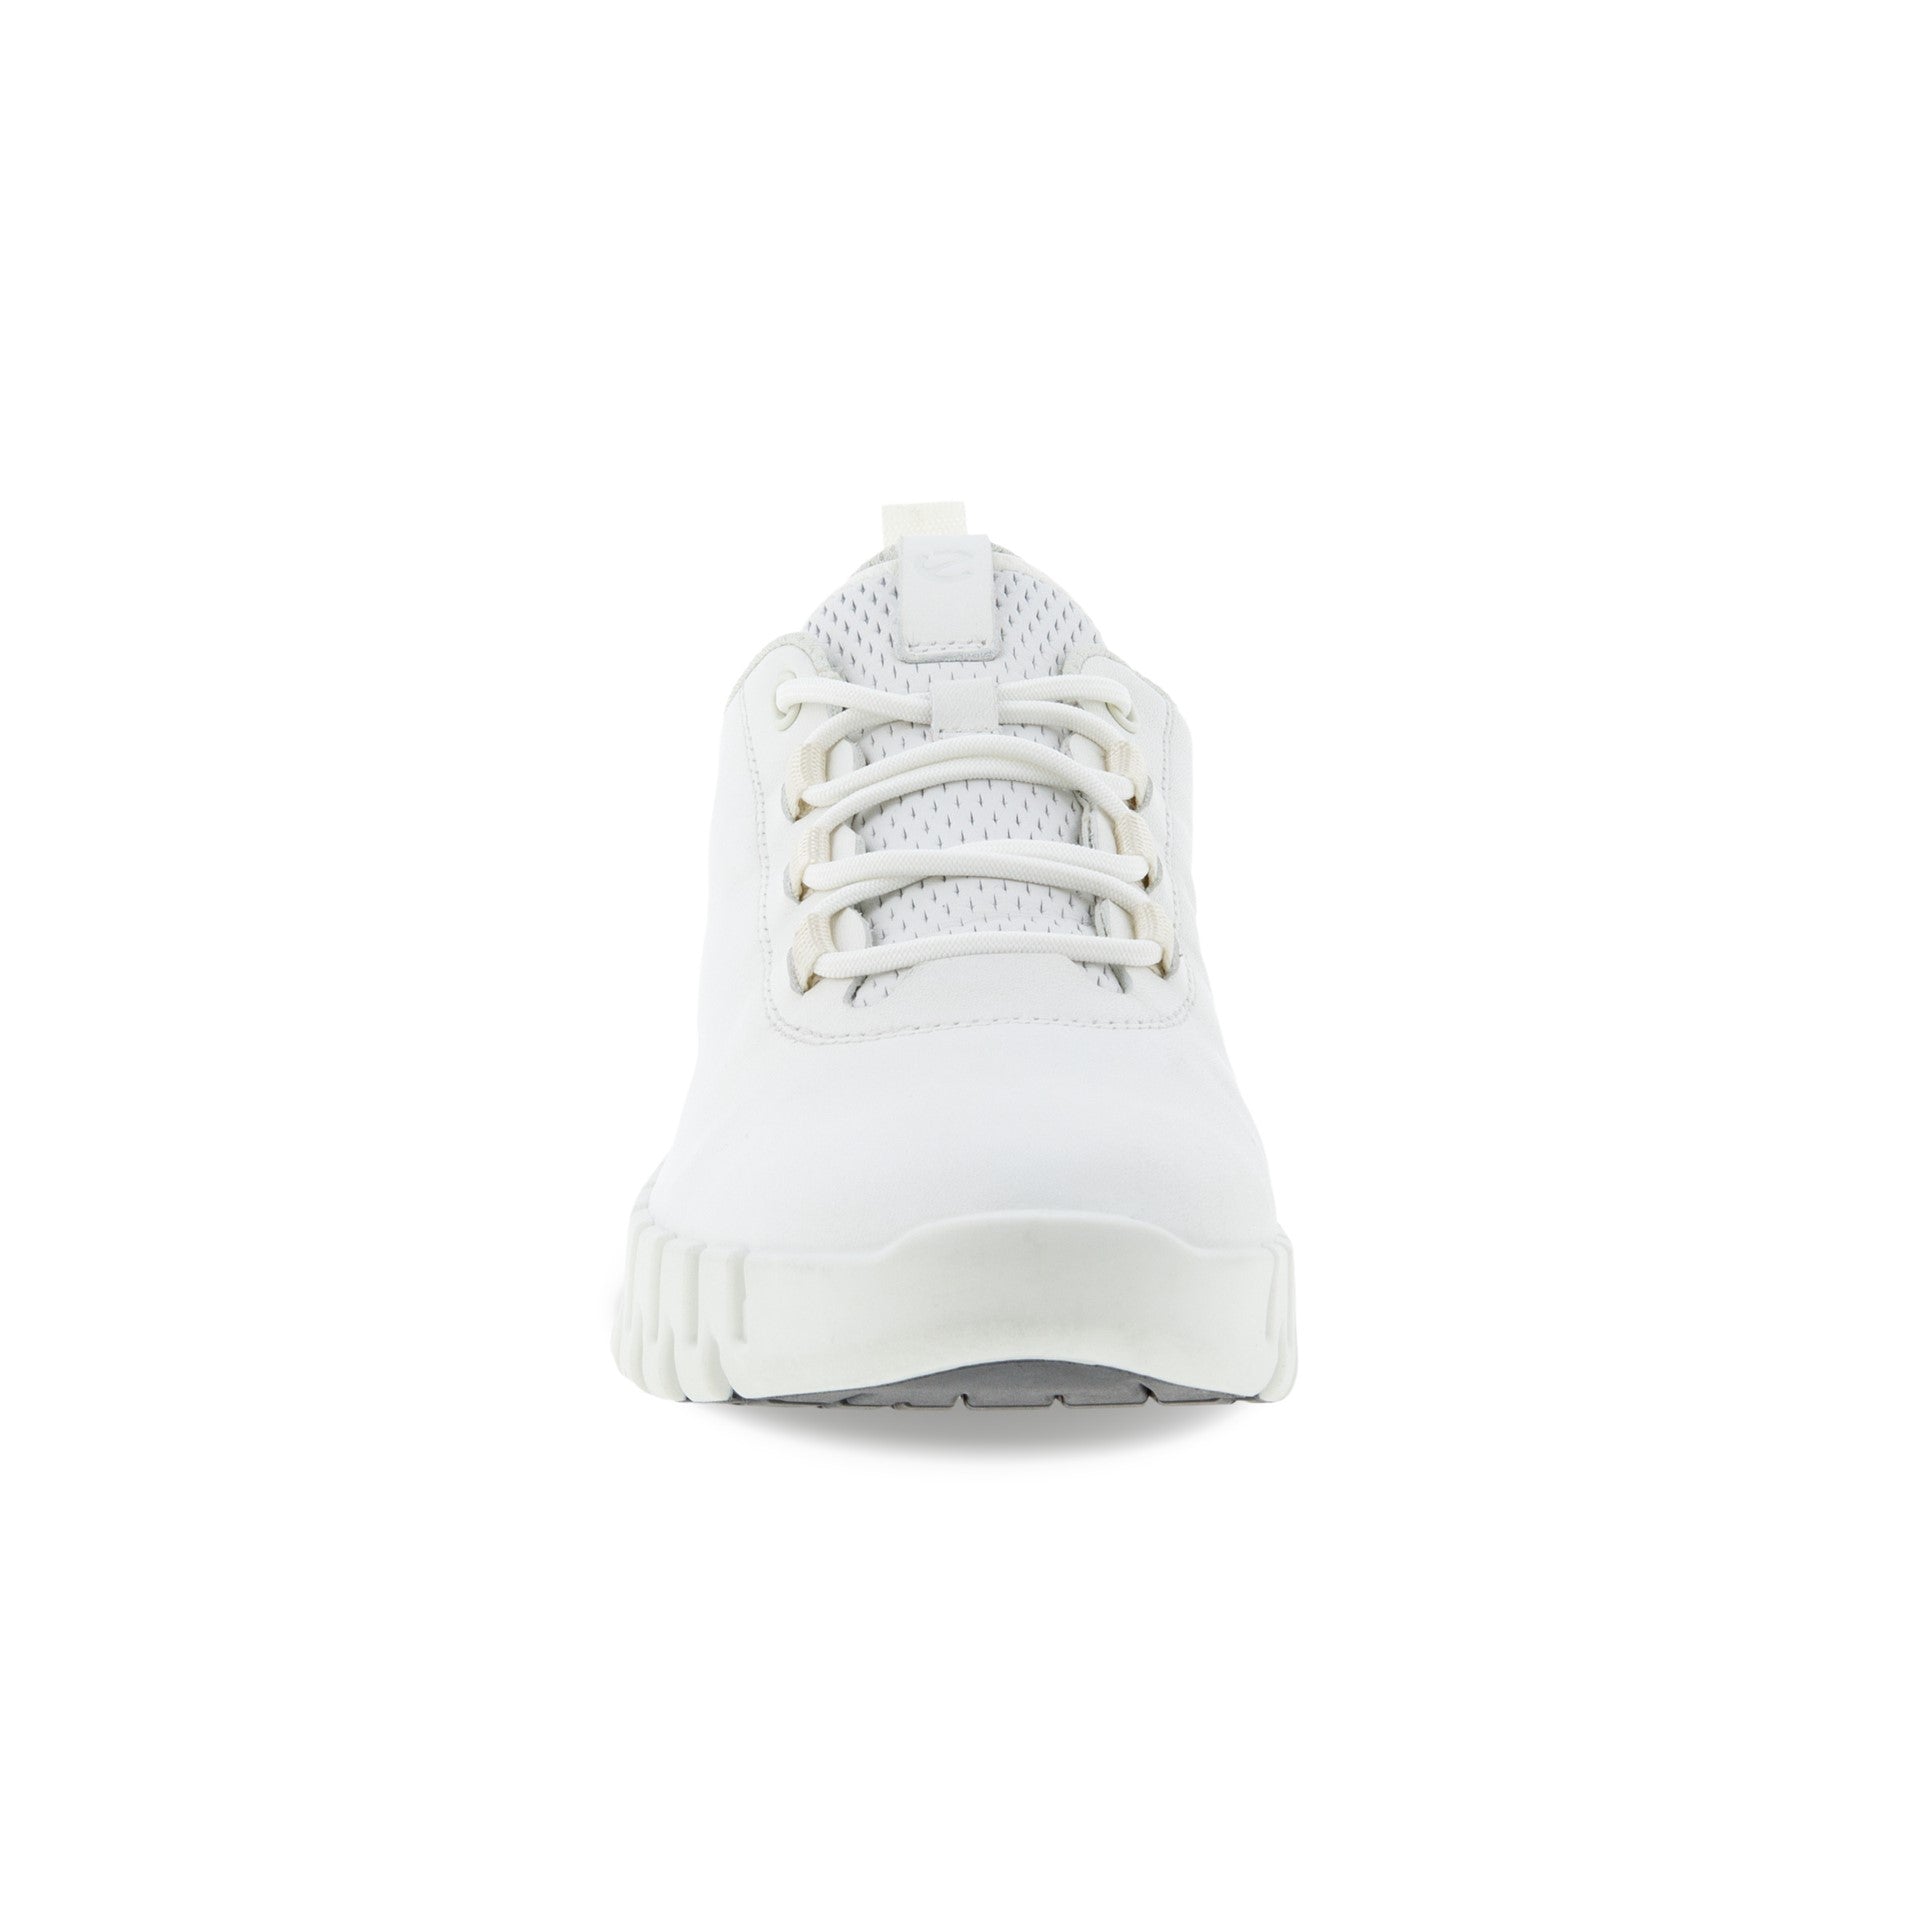 Gruuv W Sneaker Lea - White/Light Grey